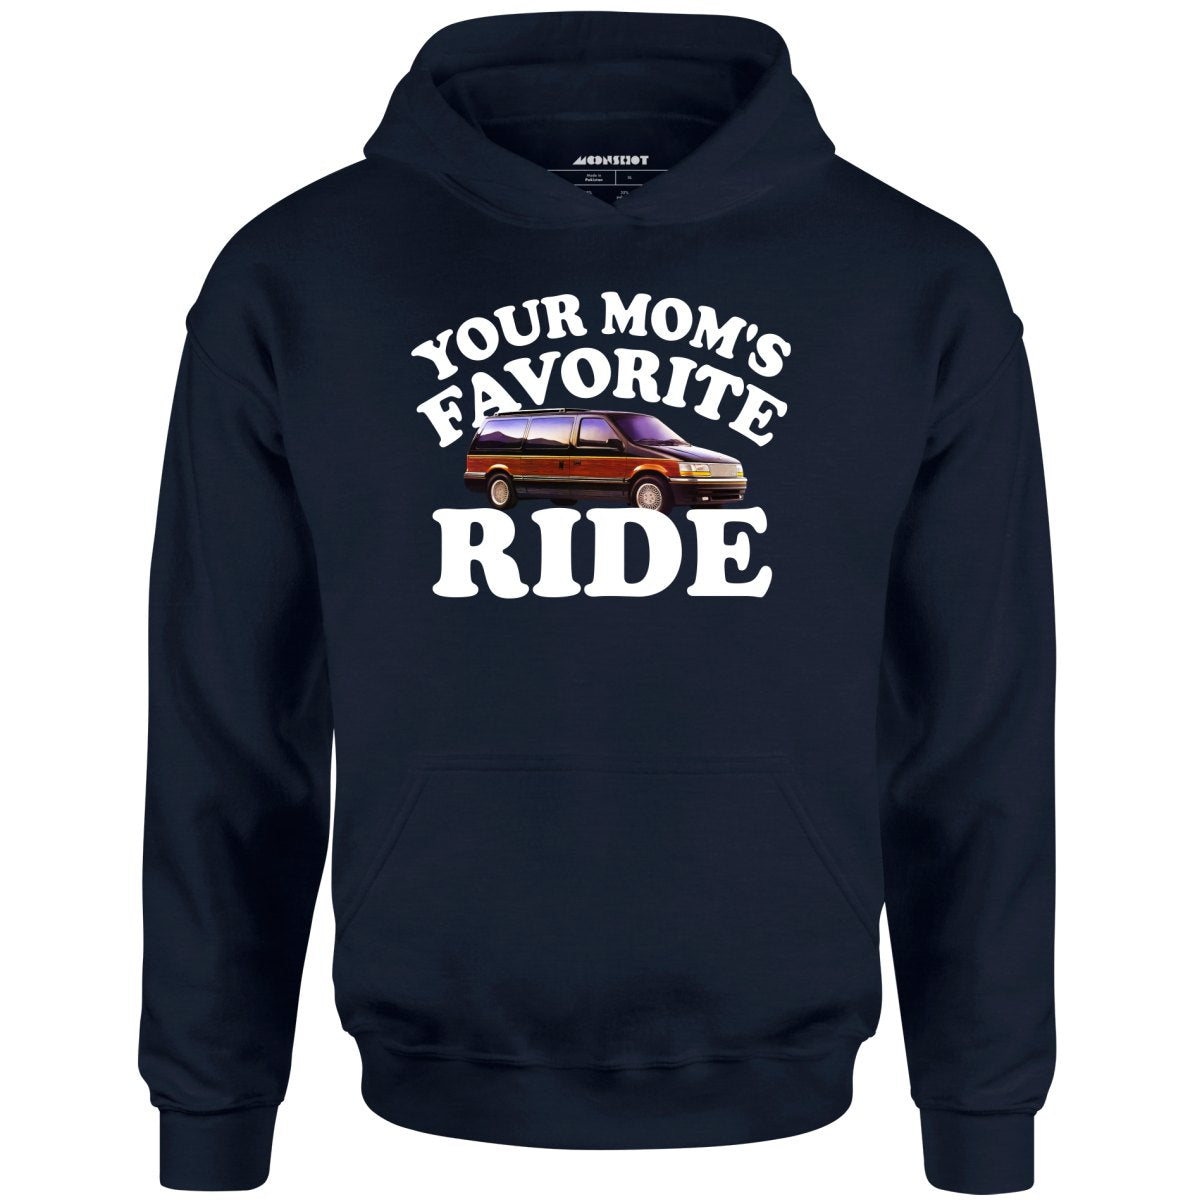 Your Mom's Favorite Ride - Unisex Hoodie